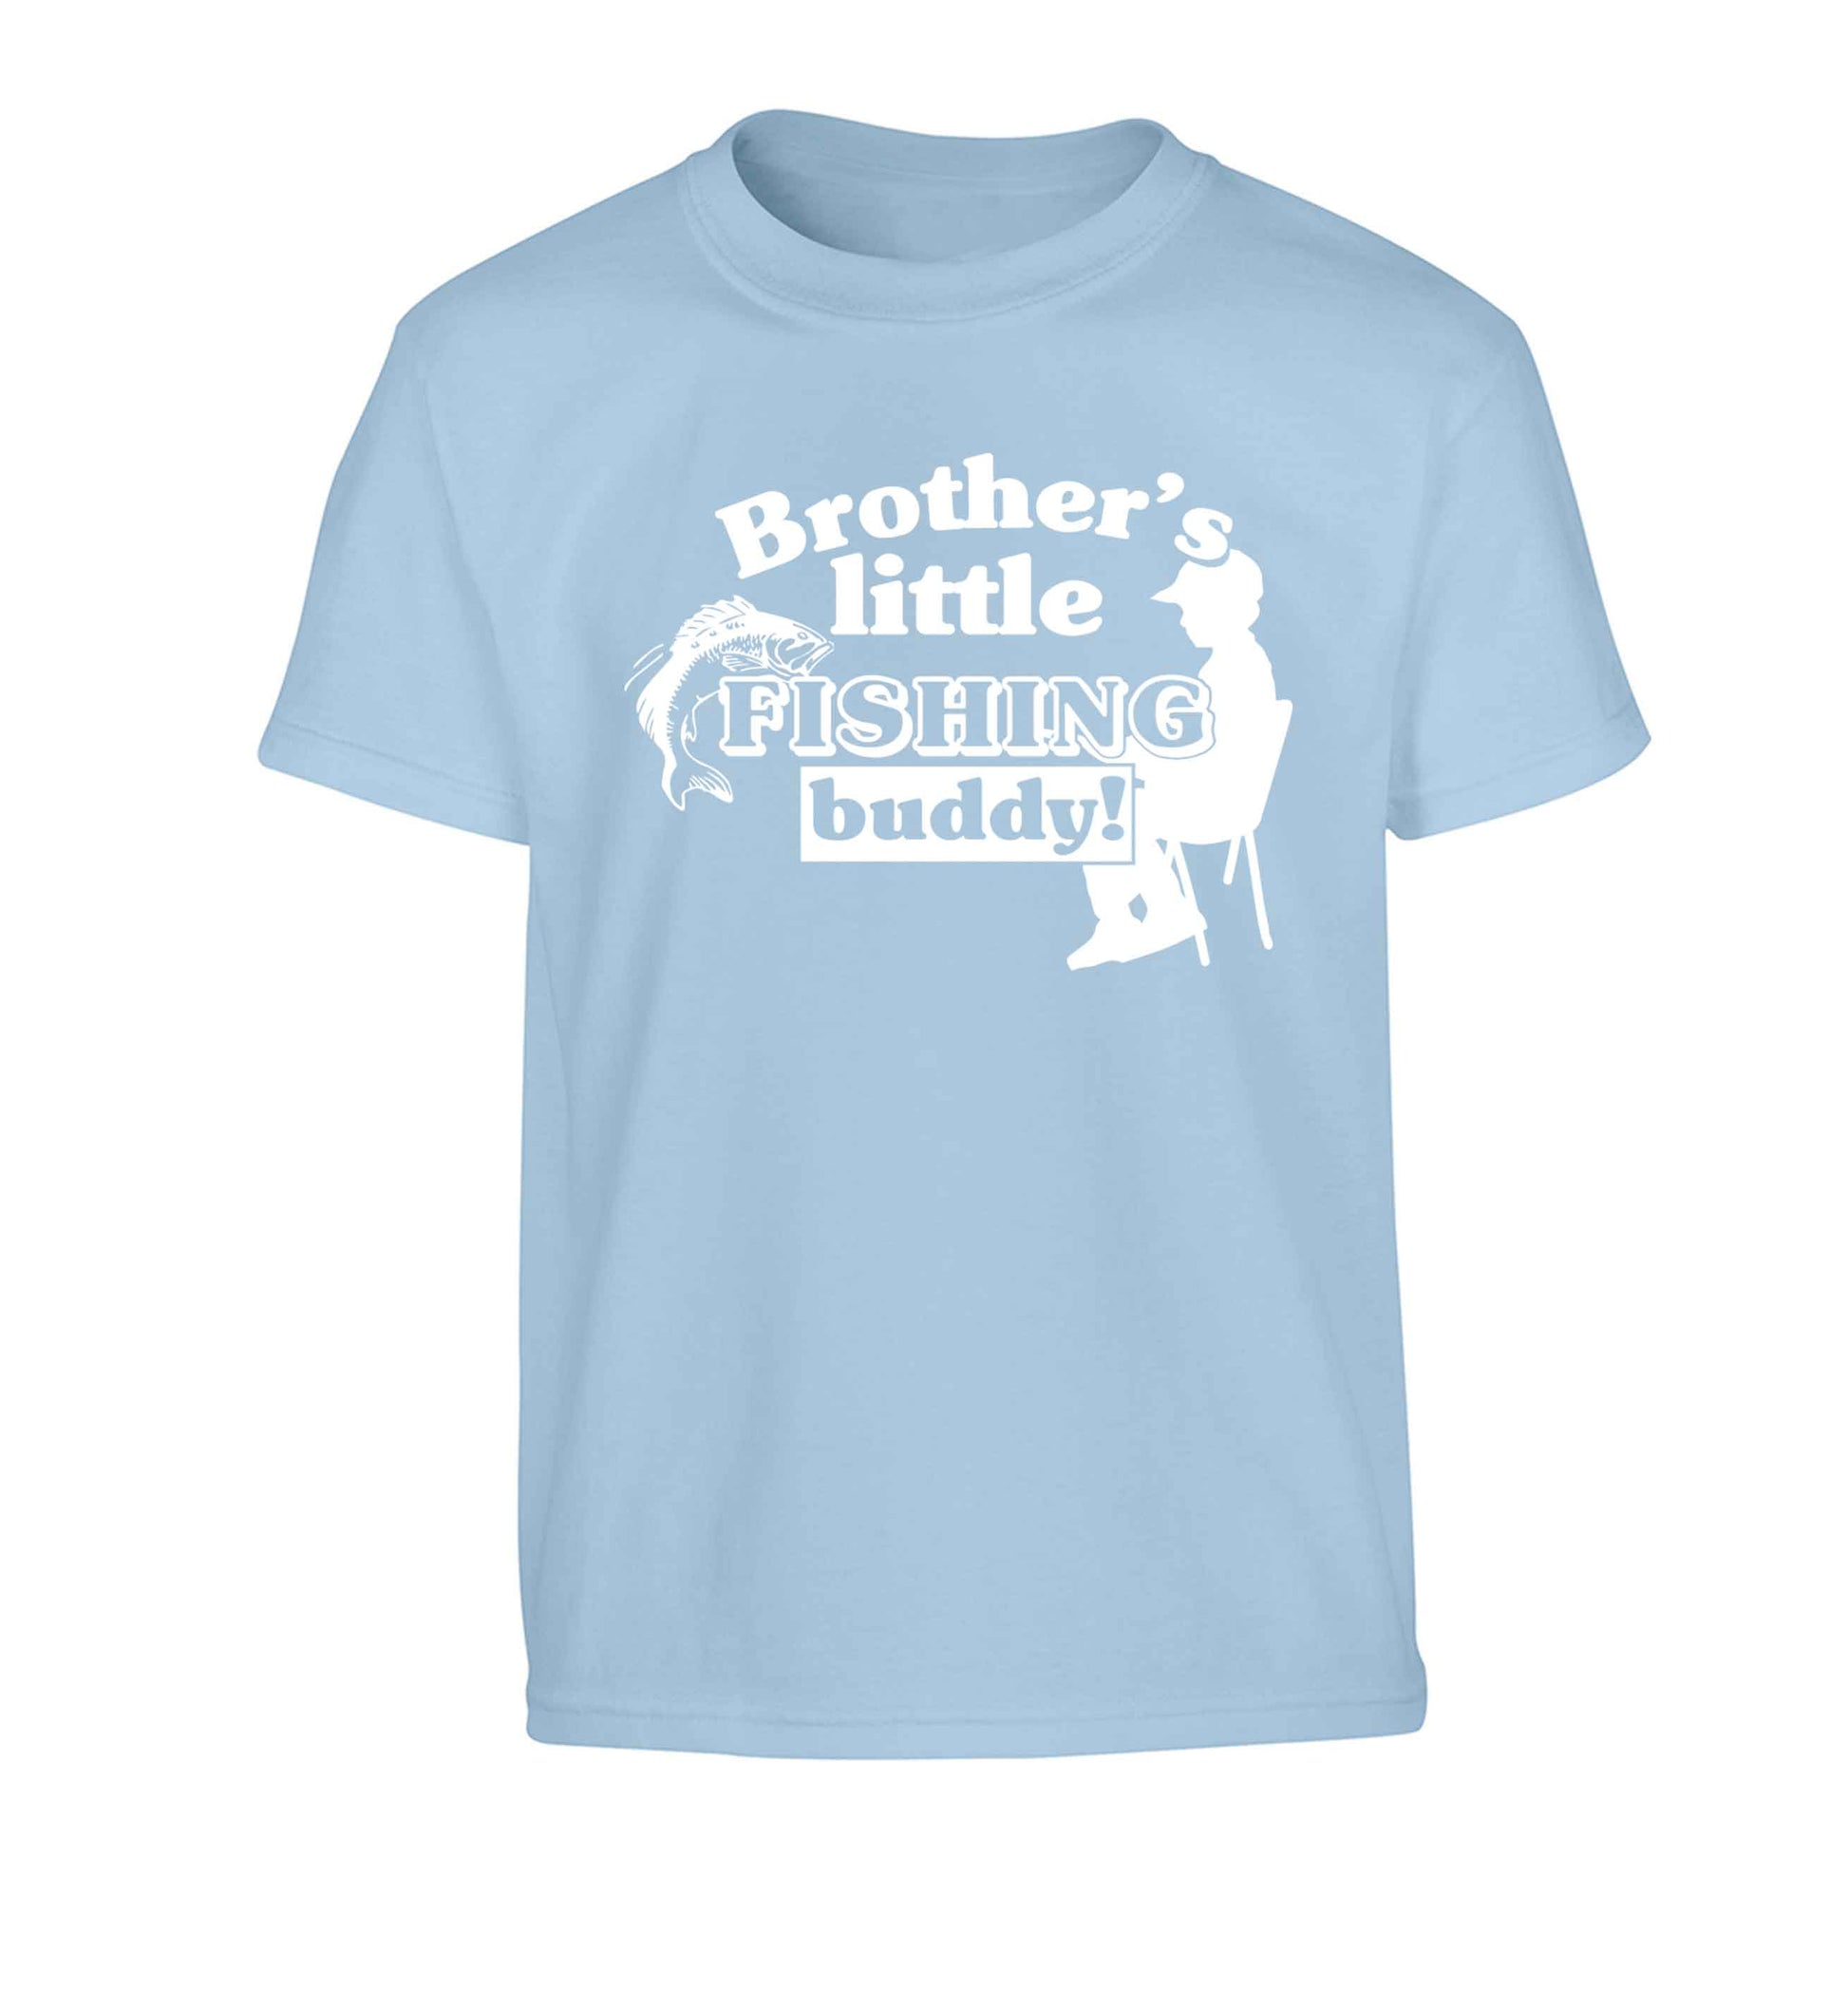 Brother's little fishing buddy Children's light blue Tshirt 12-13 Years